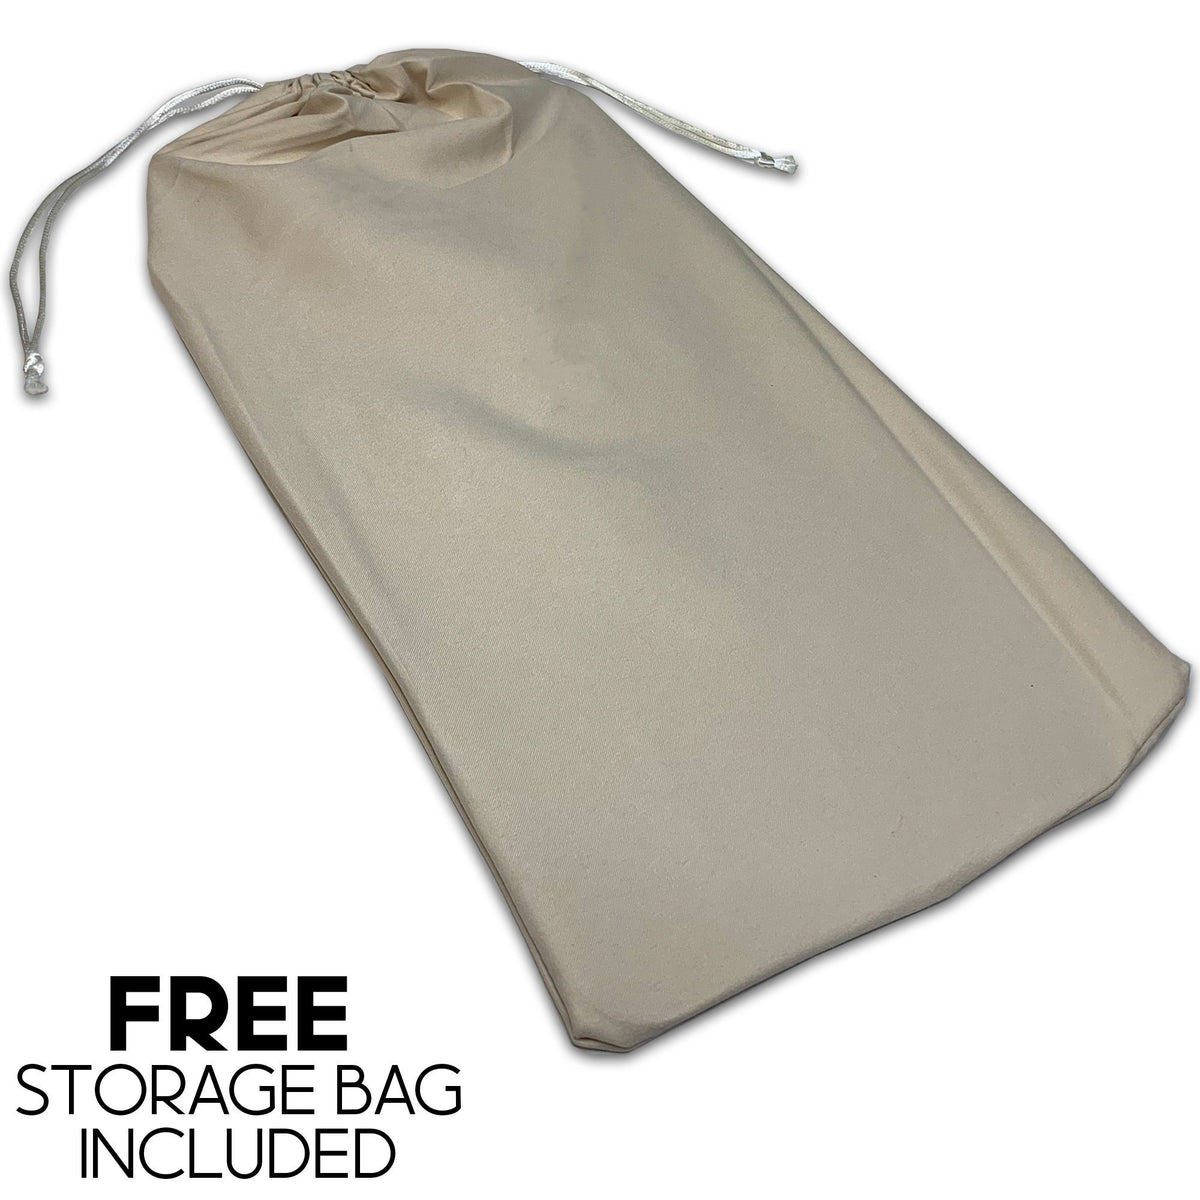 Base Shaper for LV Graceful Bags